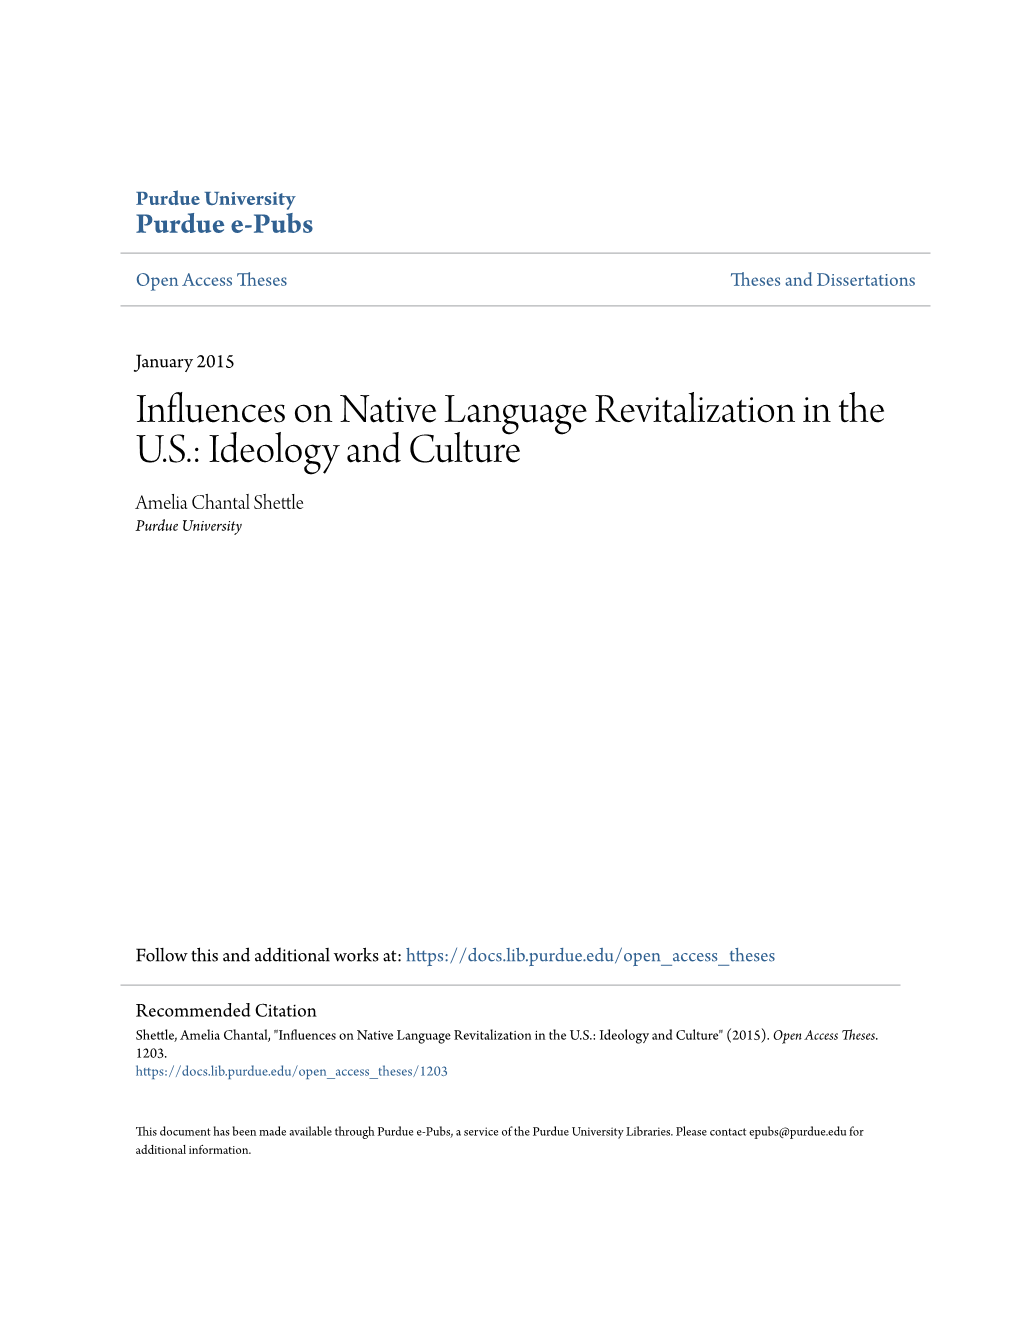 Influences on Native Language Revitalization in the U.S.: Ideology and Culture Amelia Chantal Shettle Purdue University